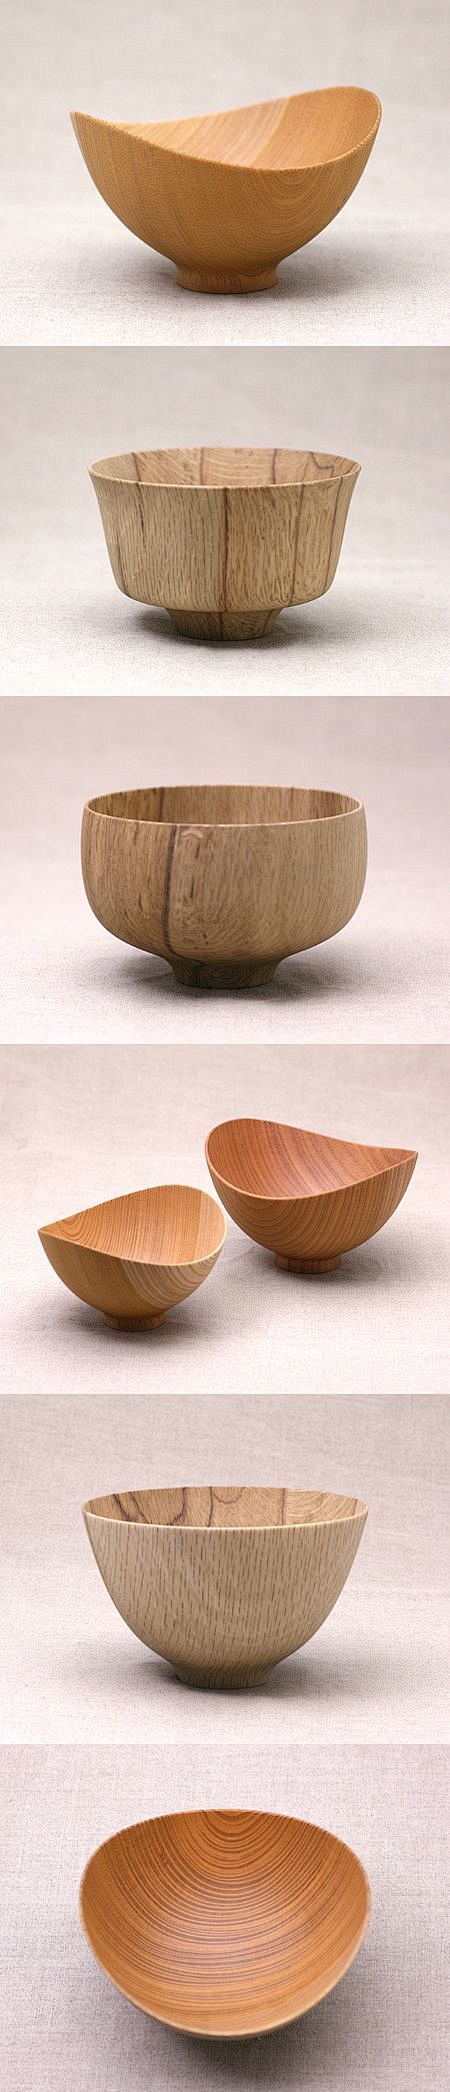 Wooden bowls. Japan....